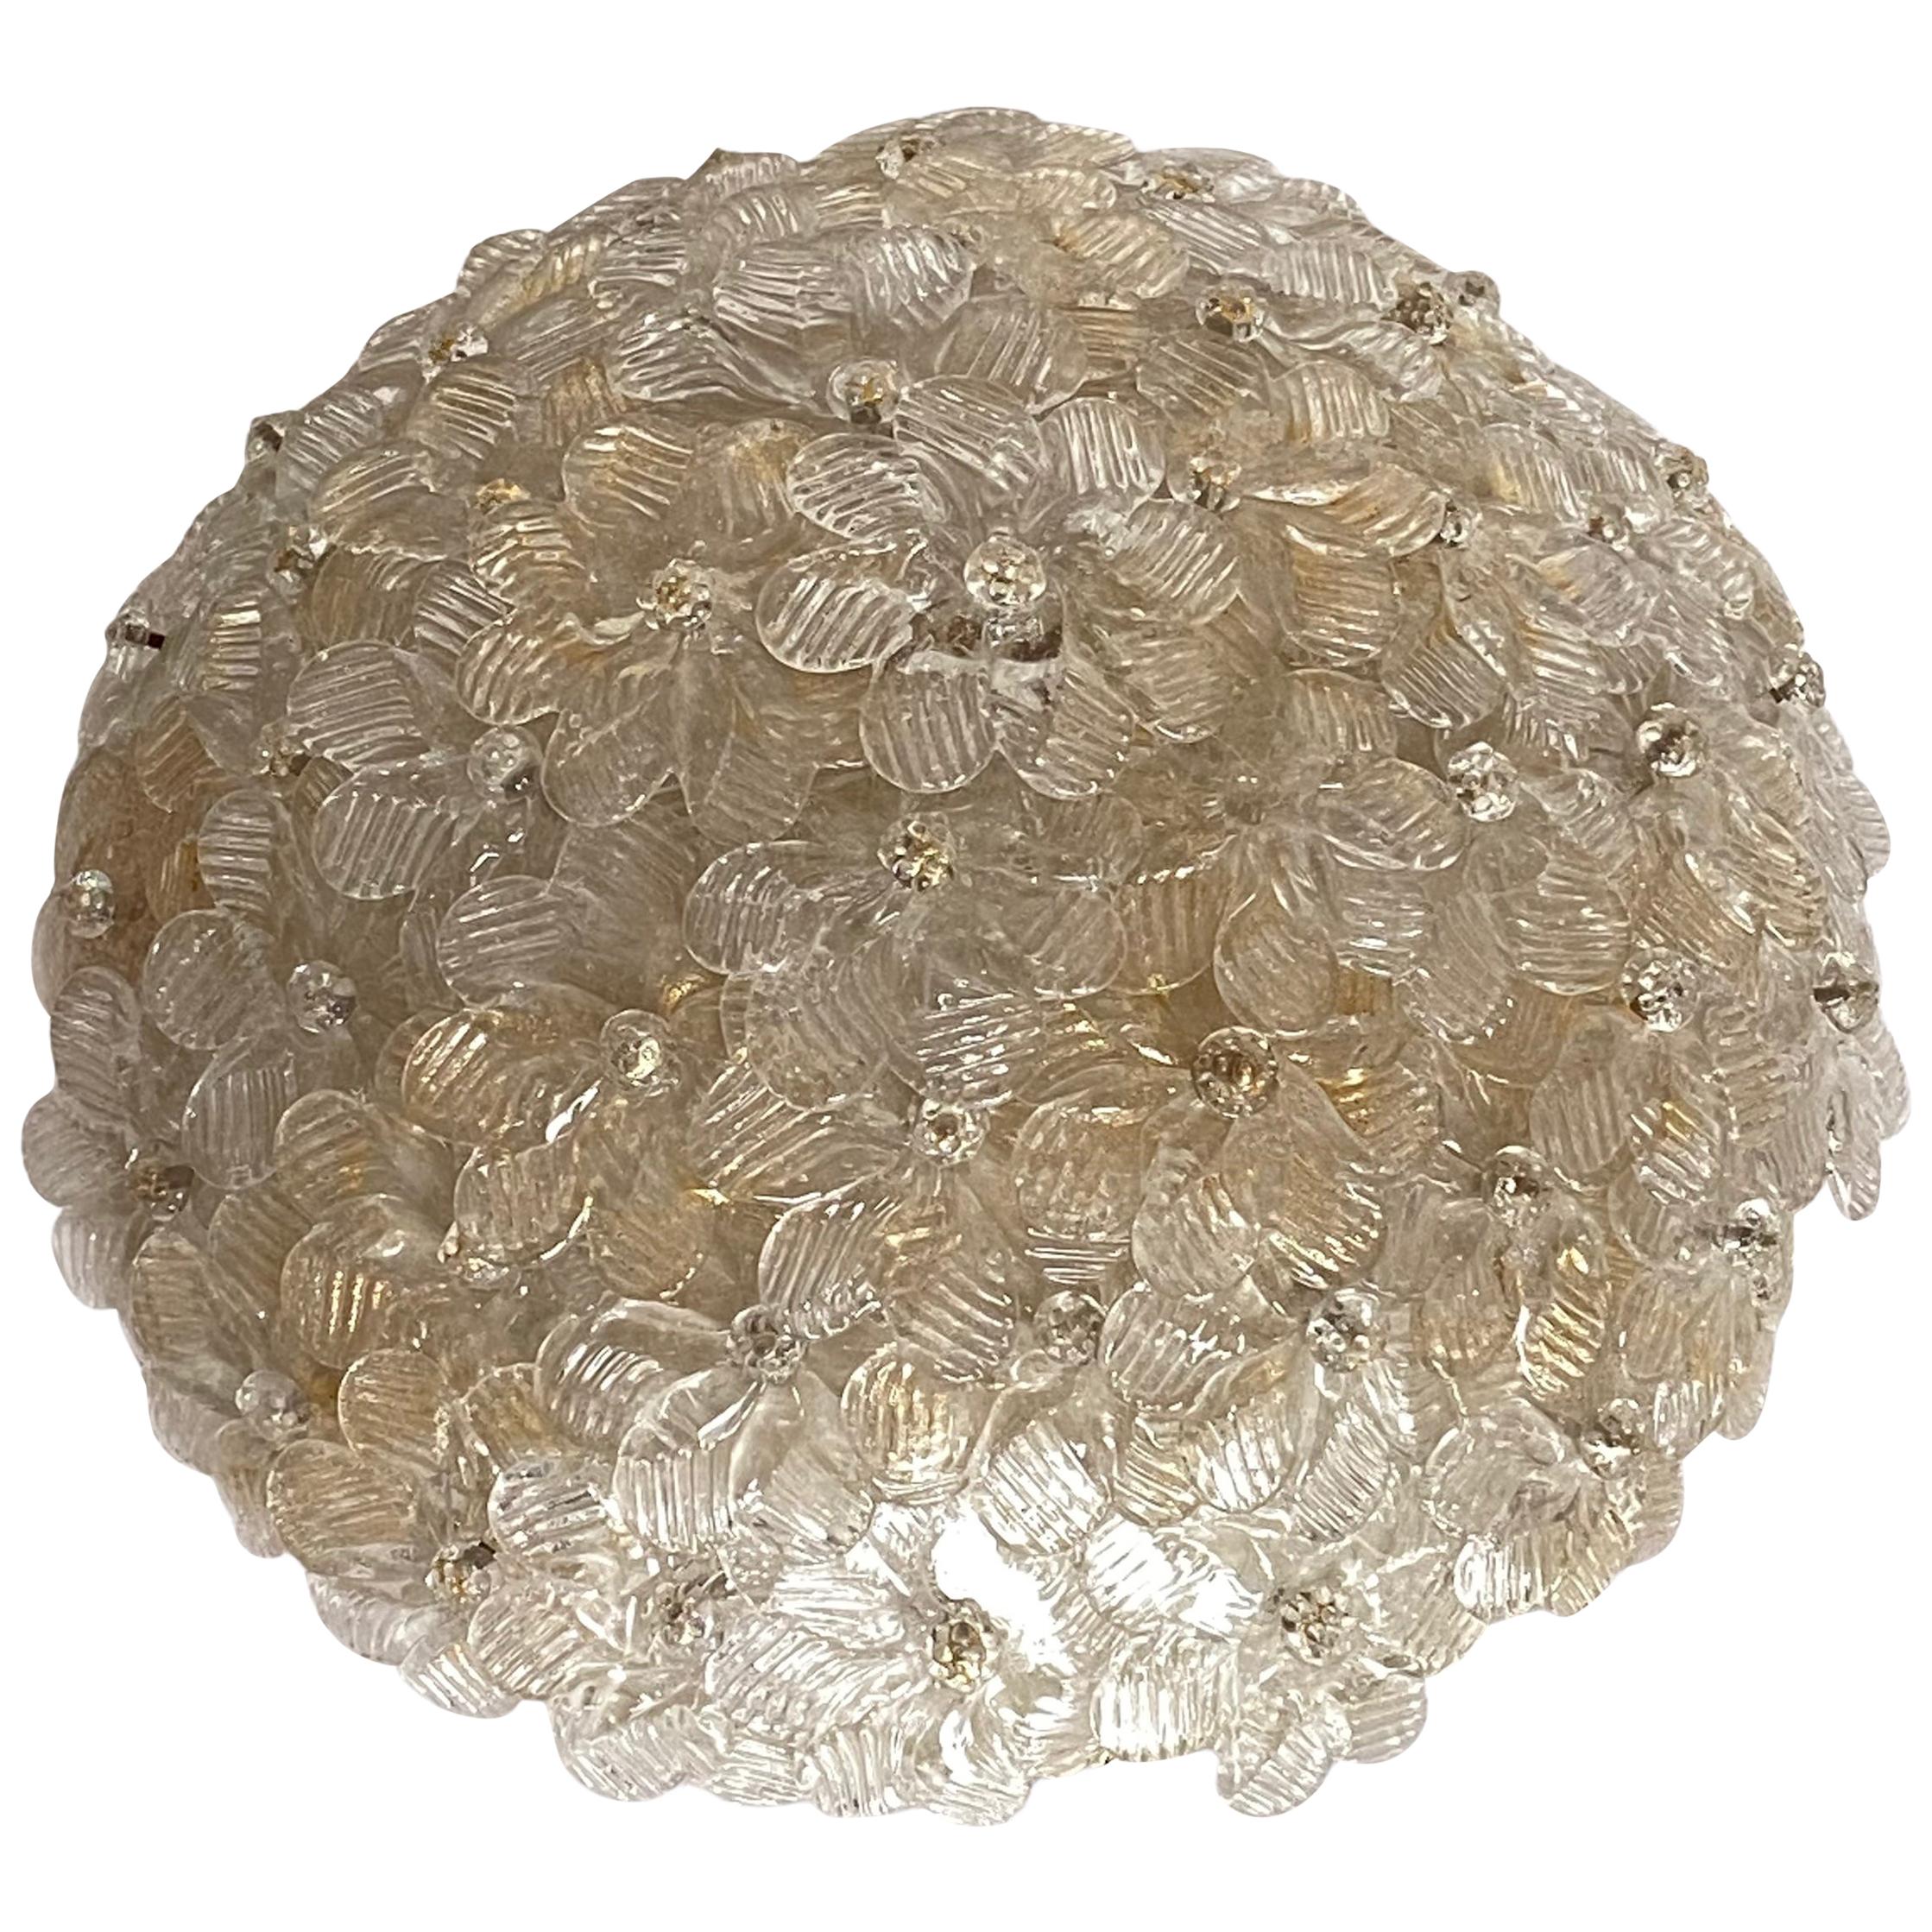 Medium Barovier Toso Flushmount Murano Glass Gold and Ice Flowers Basket, 1950s